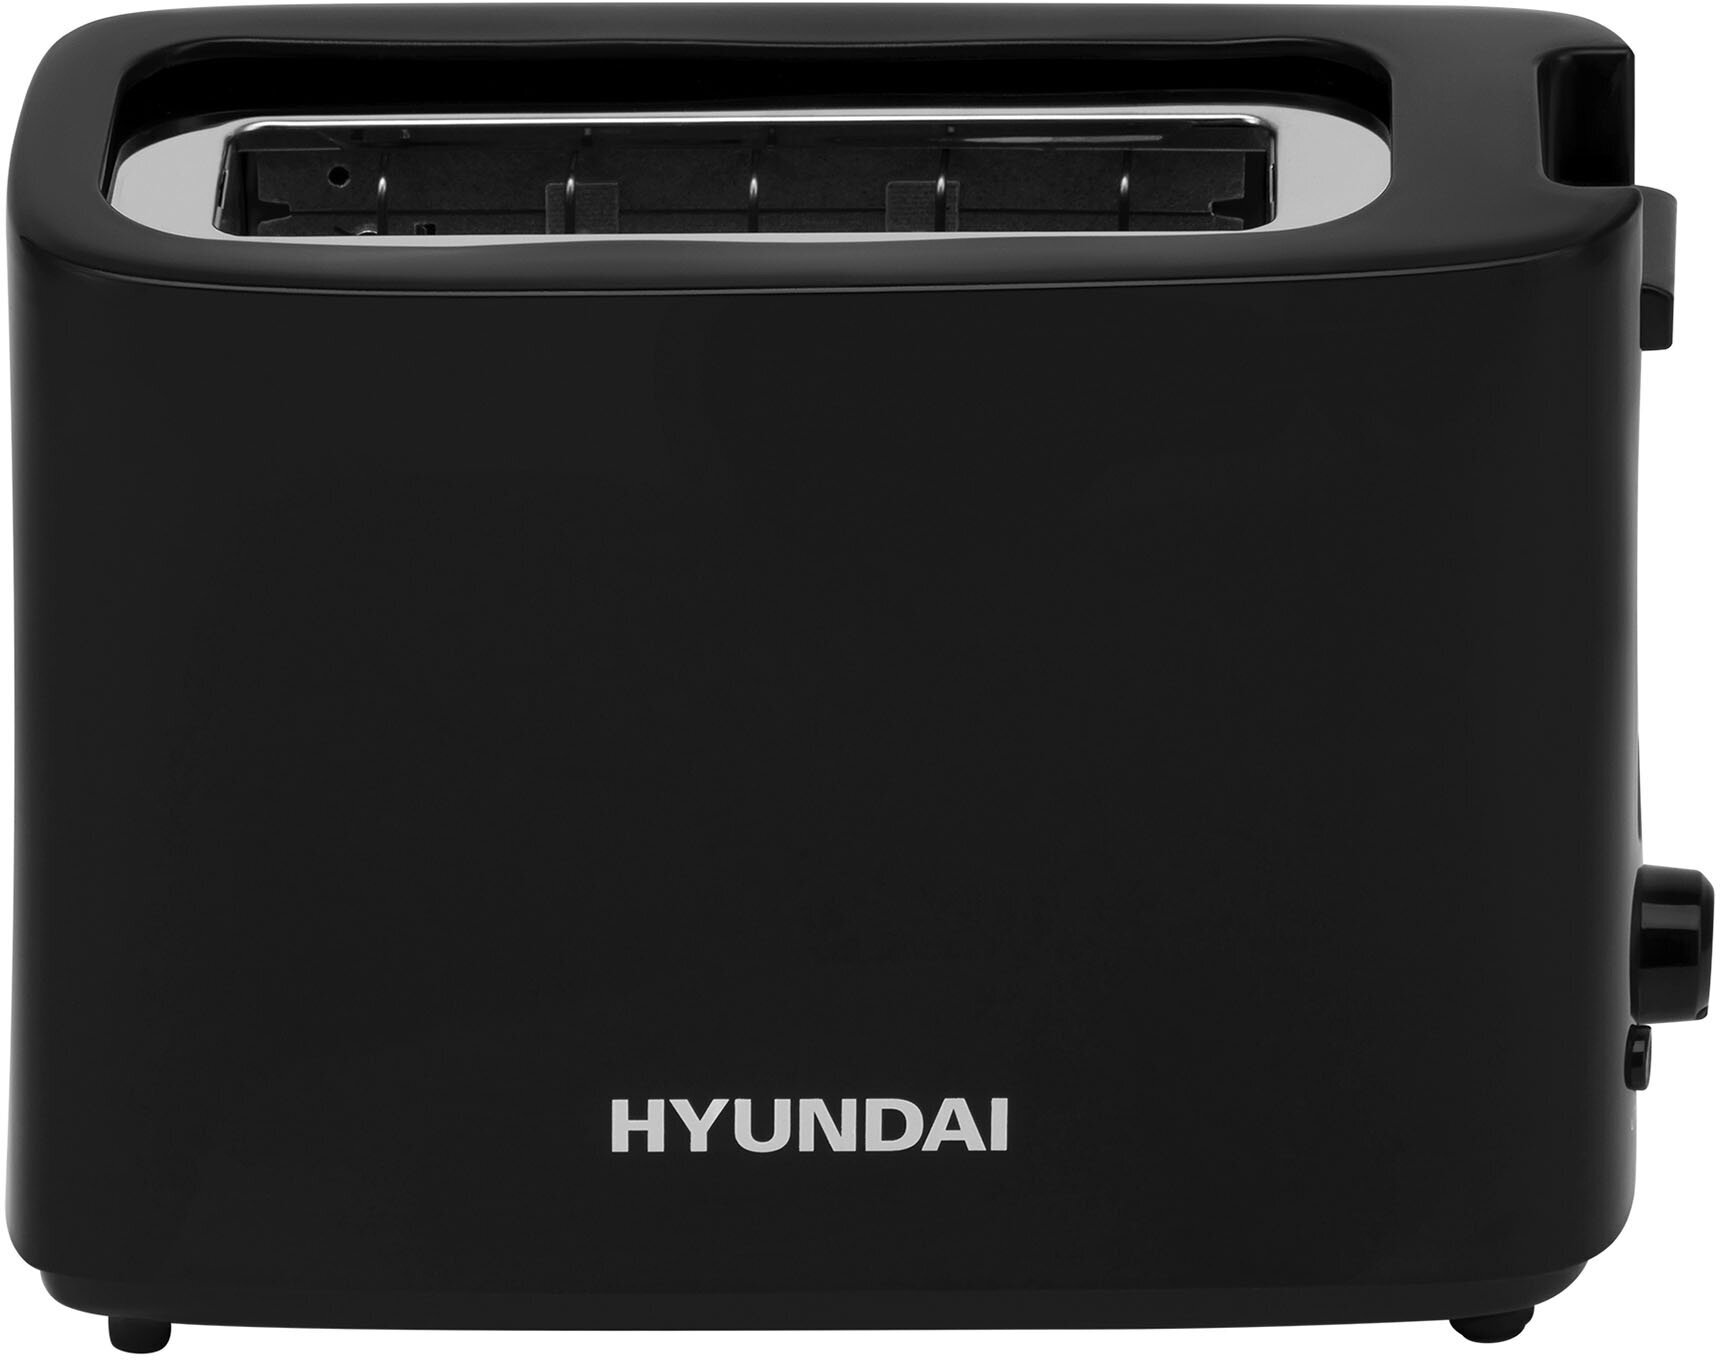 Тостер Hyundai HYT-8007 500Вт, бесступенчатый терморегулятор, черный